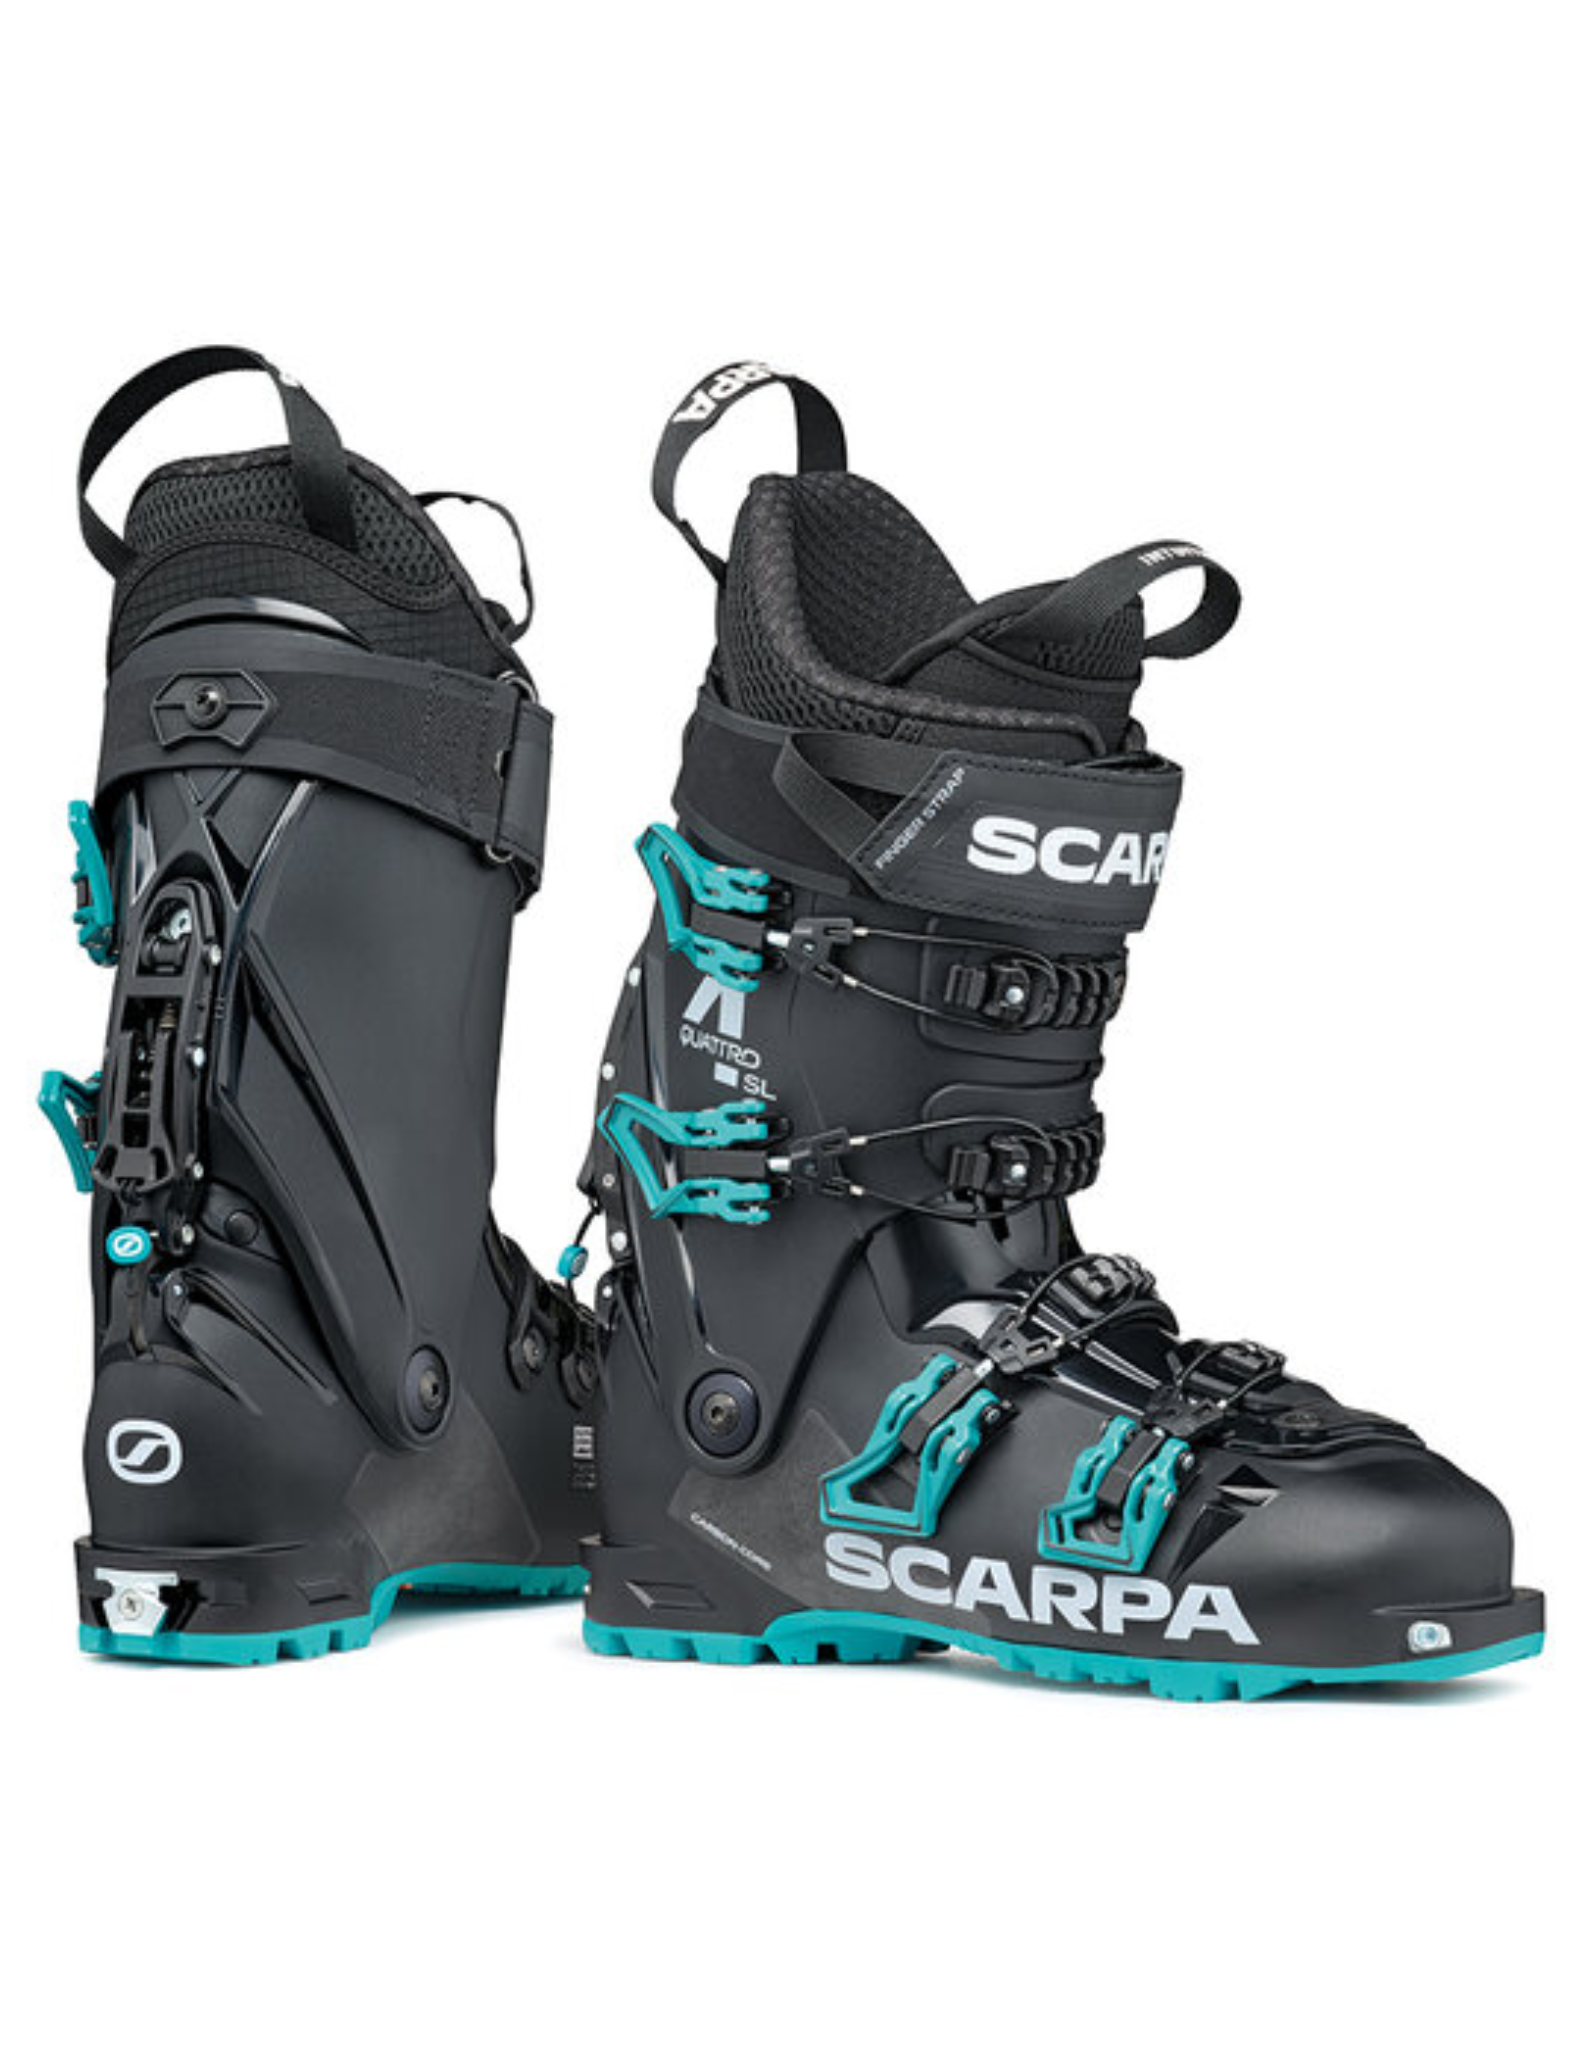 Chaussures de Ski de Rando Scarpa Quattro SL Femme